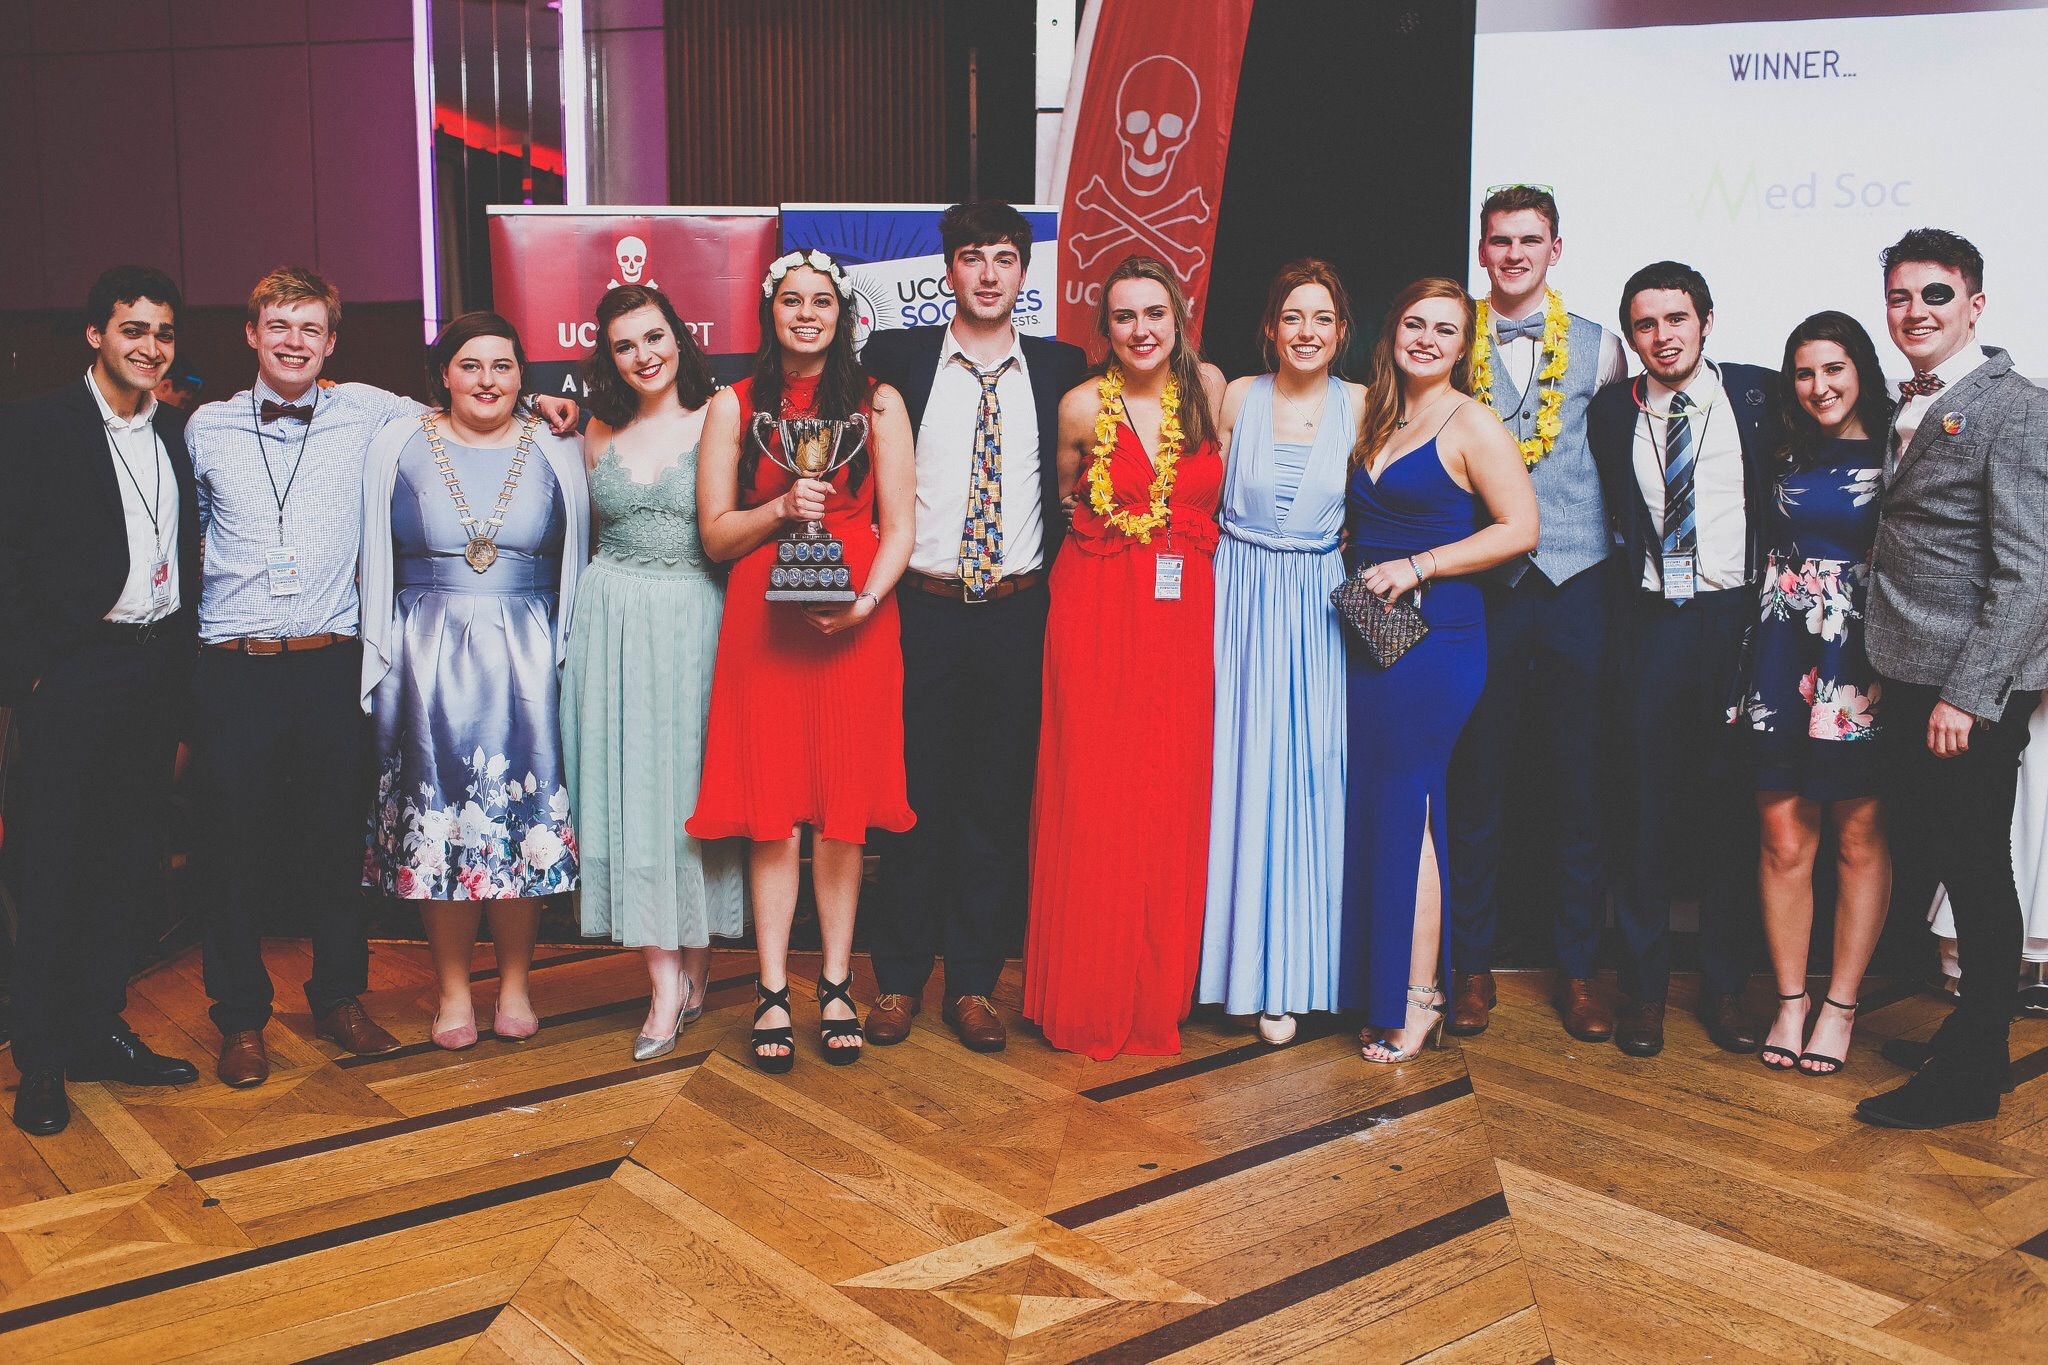 Success for Medical Student Societies at UCC Society Awards